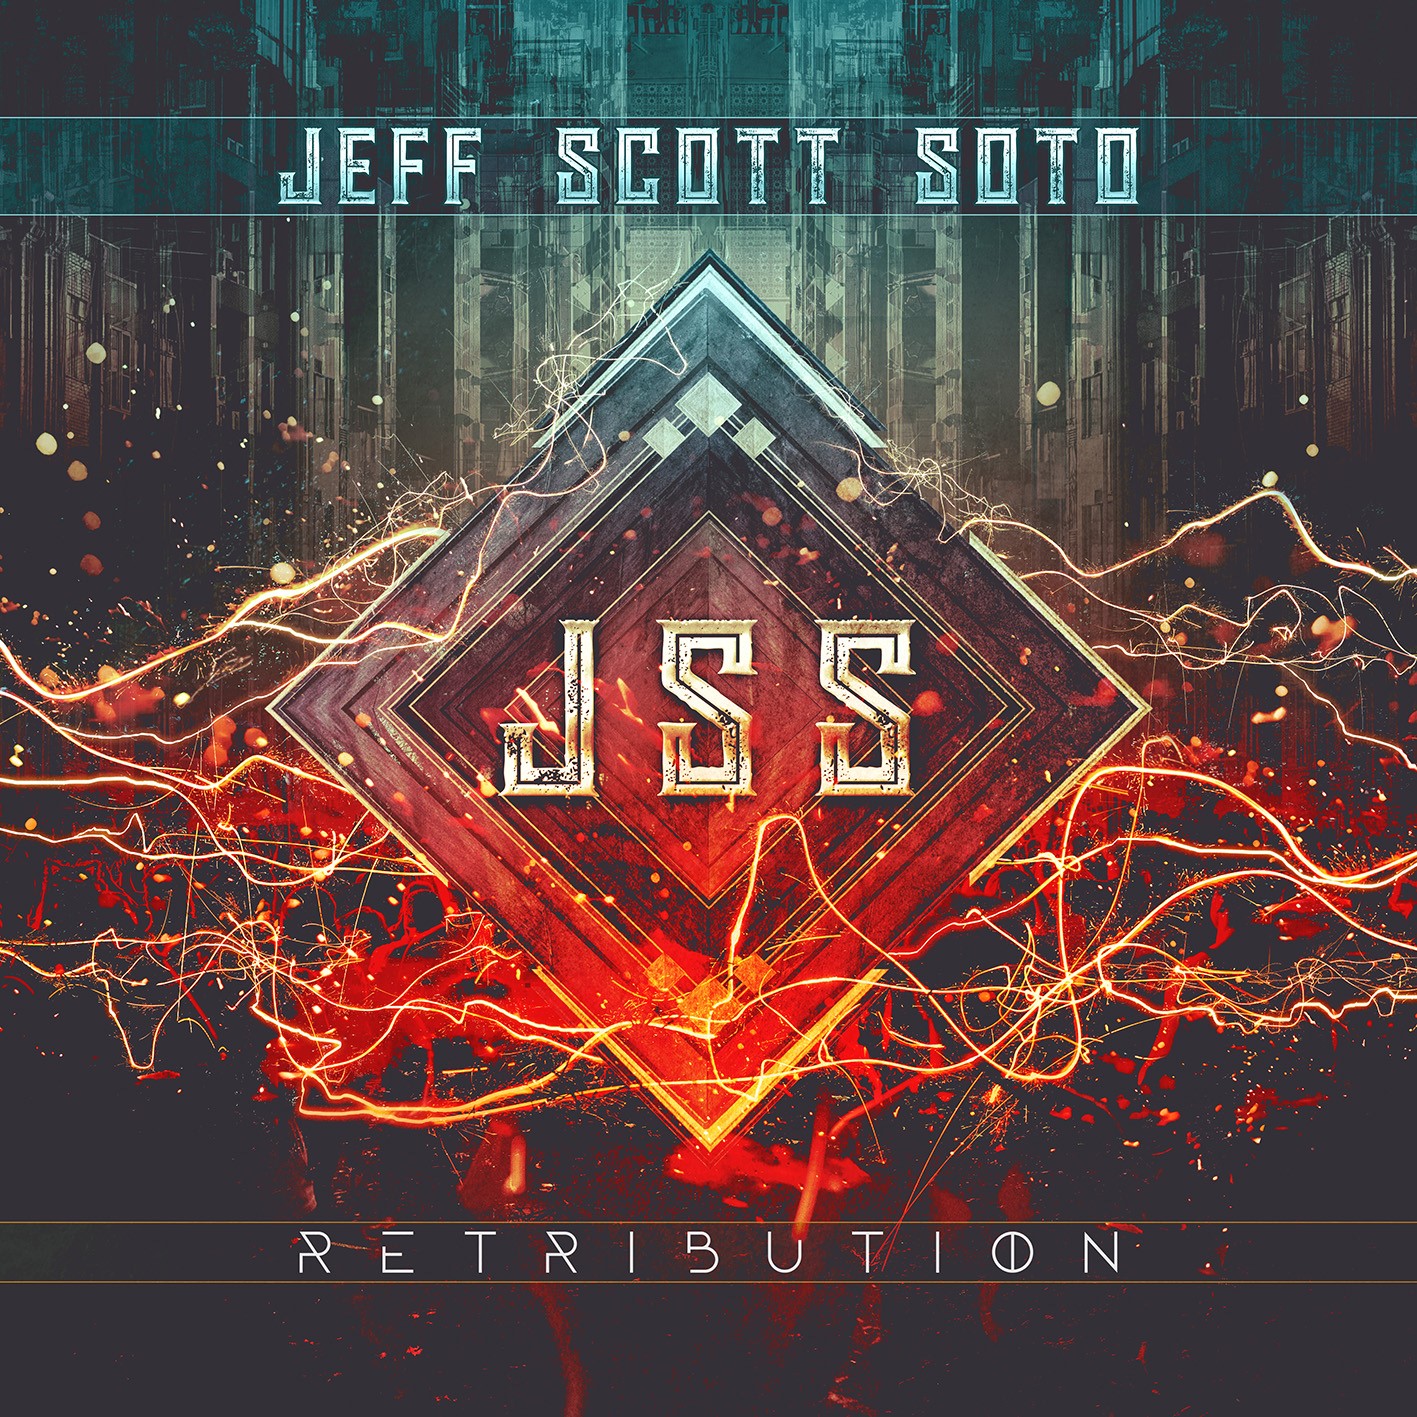 Jeff Scott Soto - Retribution - CD